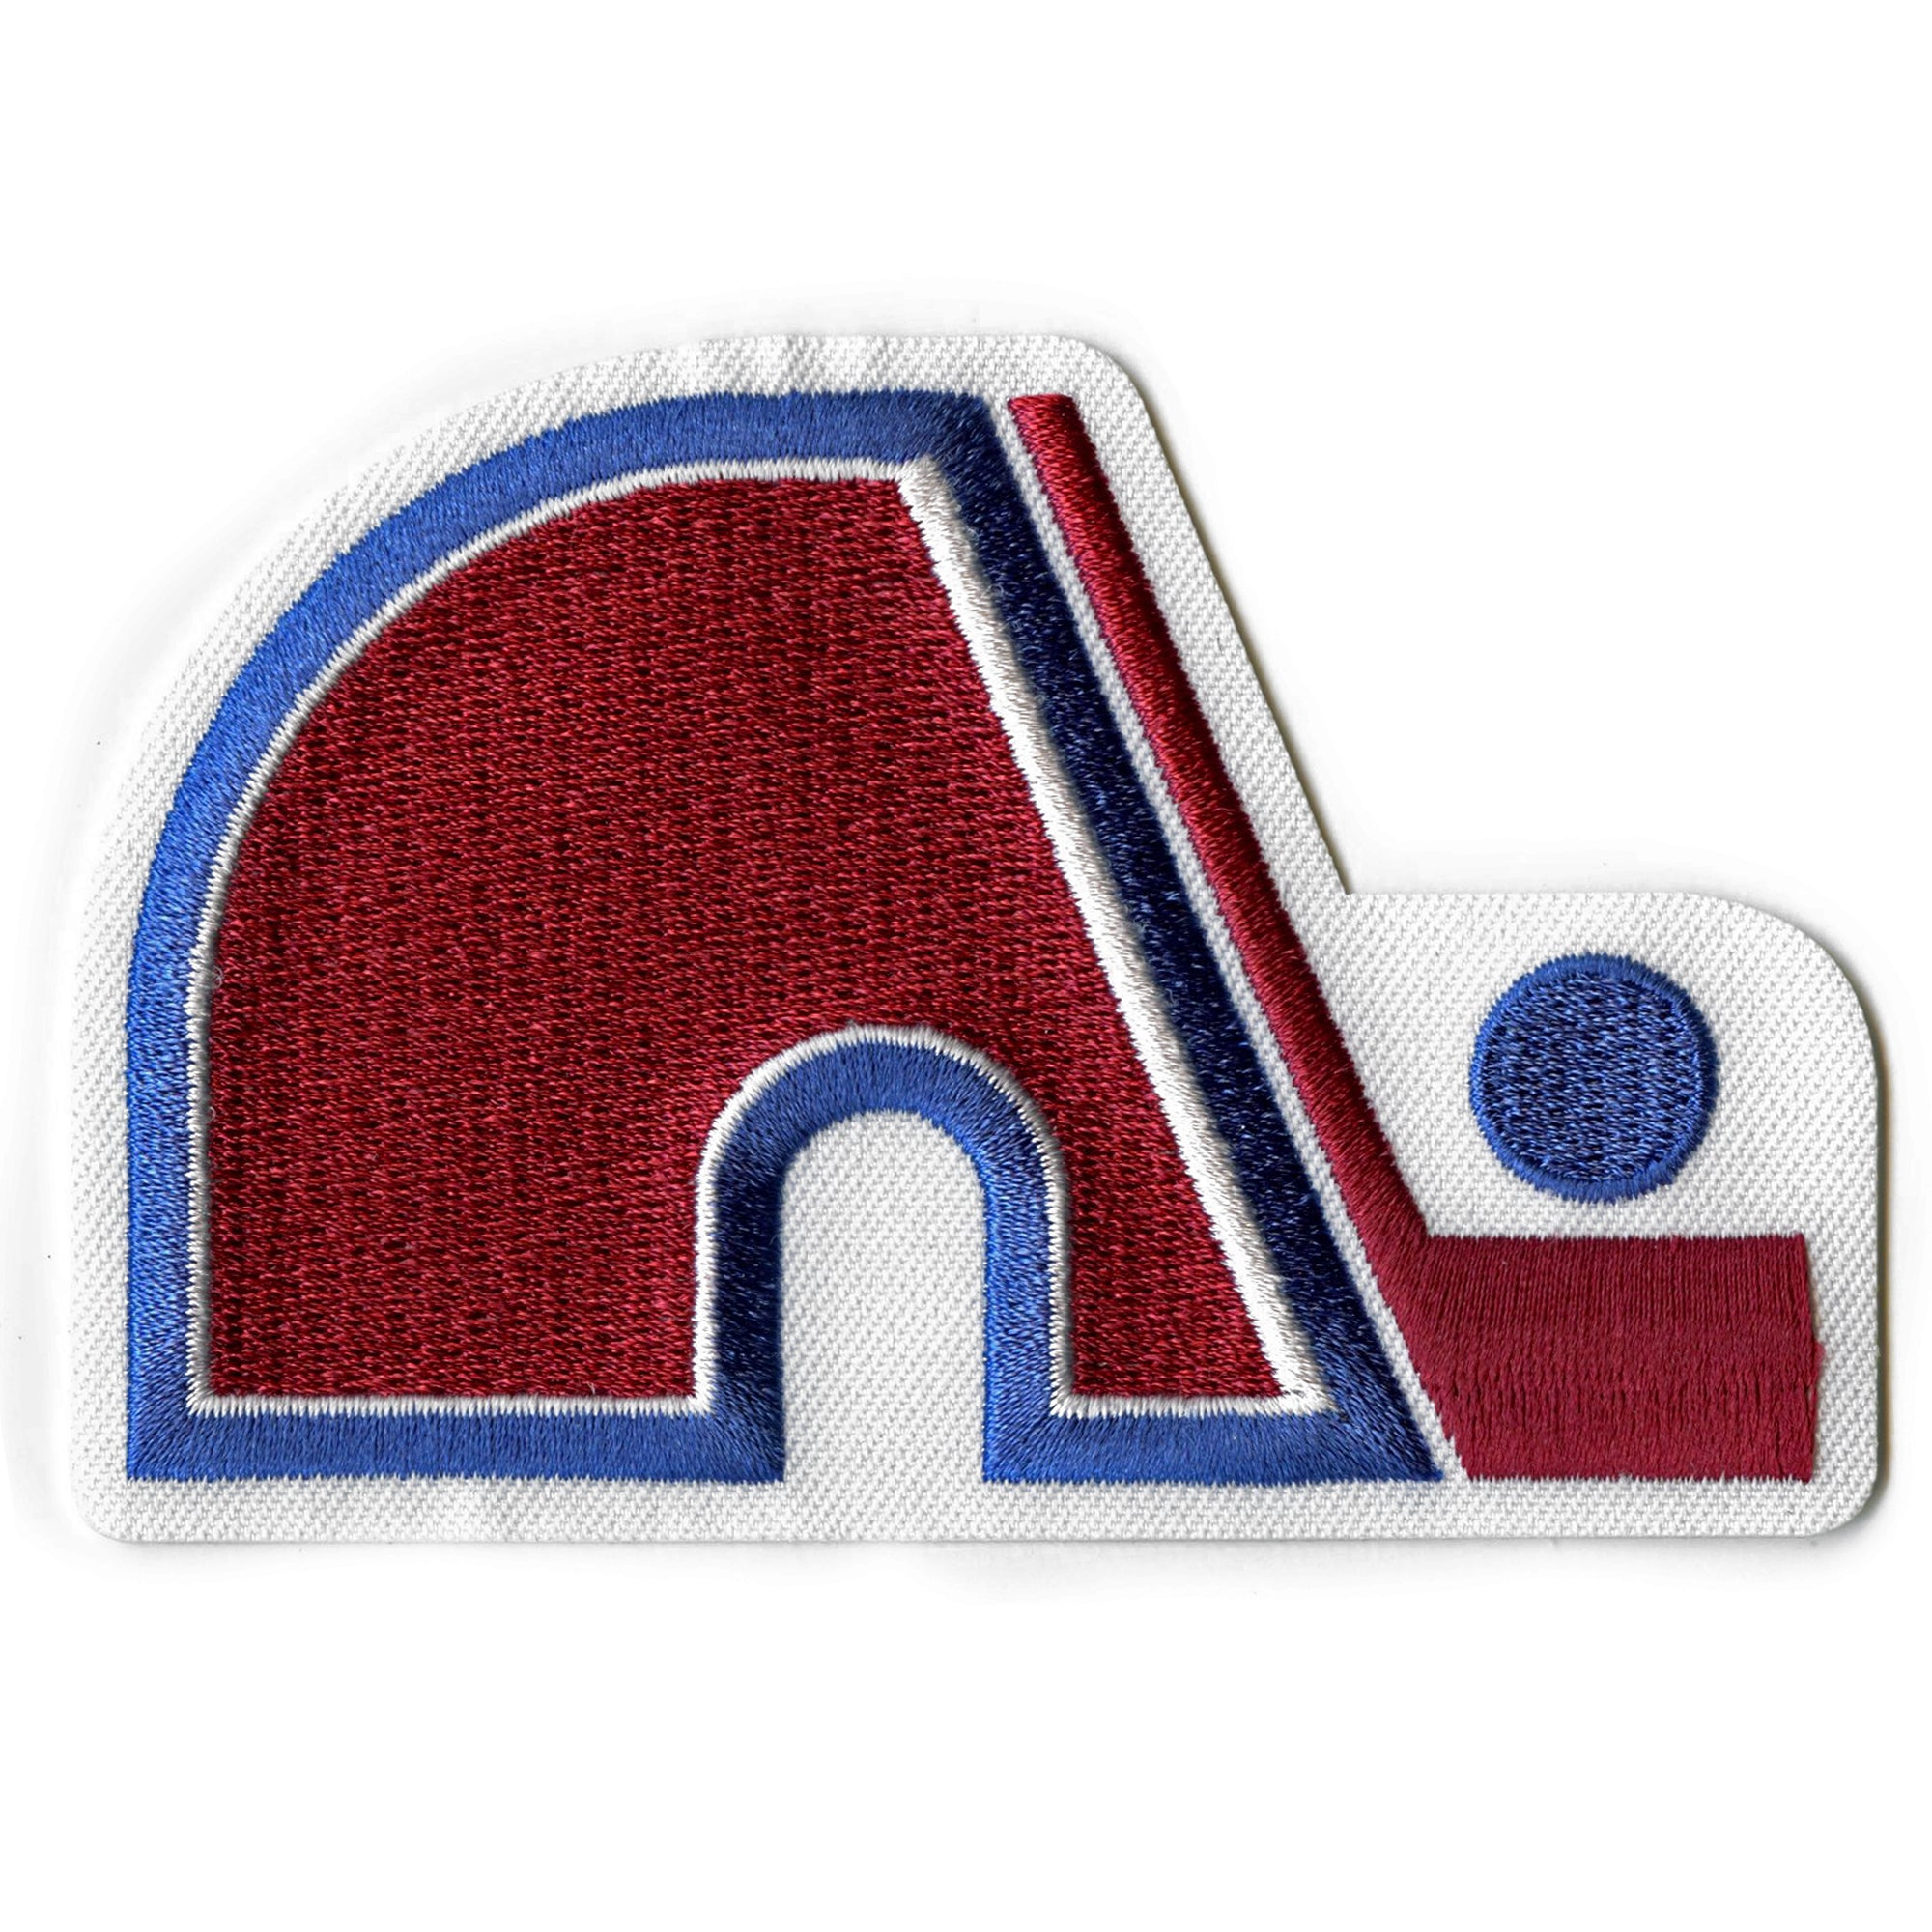 Colorado Avalanche Hockey Team Retro Logo Vintage Recycled